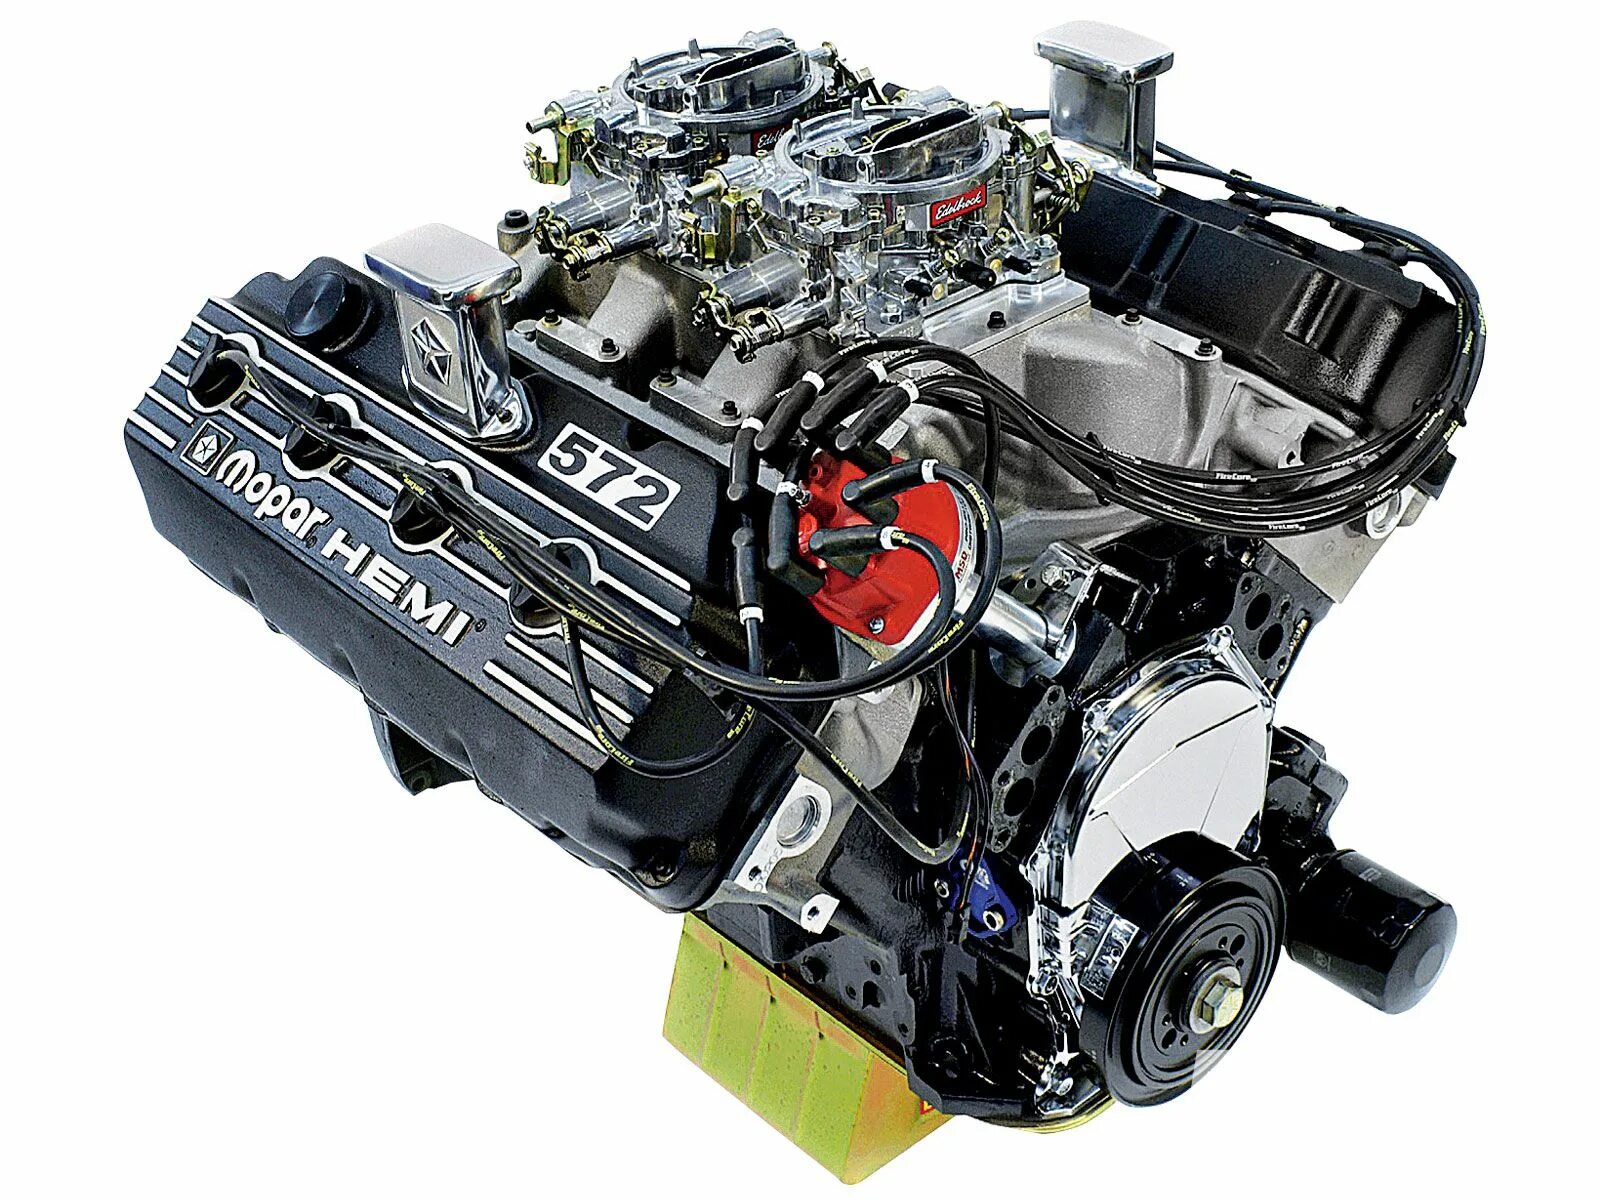 Мотор Hemi v8. 426 Hemi v8. Двигатель 6.4 Hemi v8. Chrysler Hemi 426.